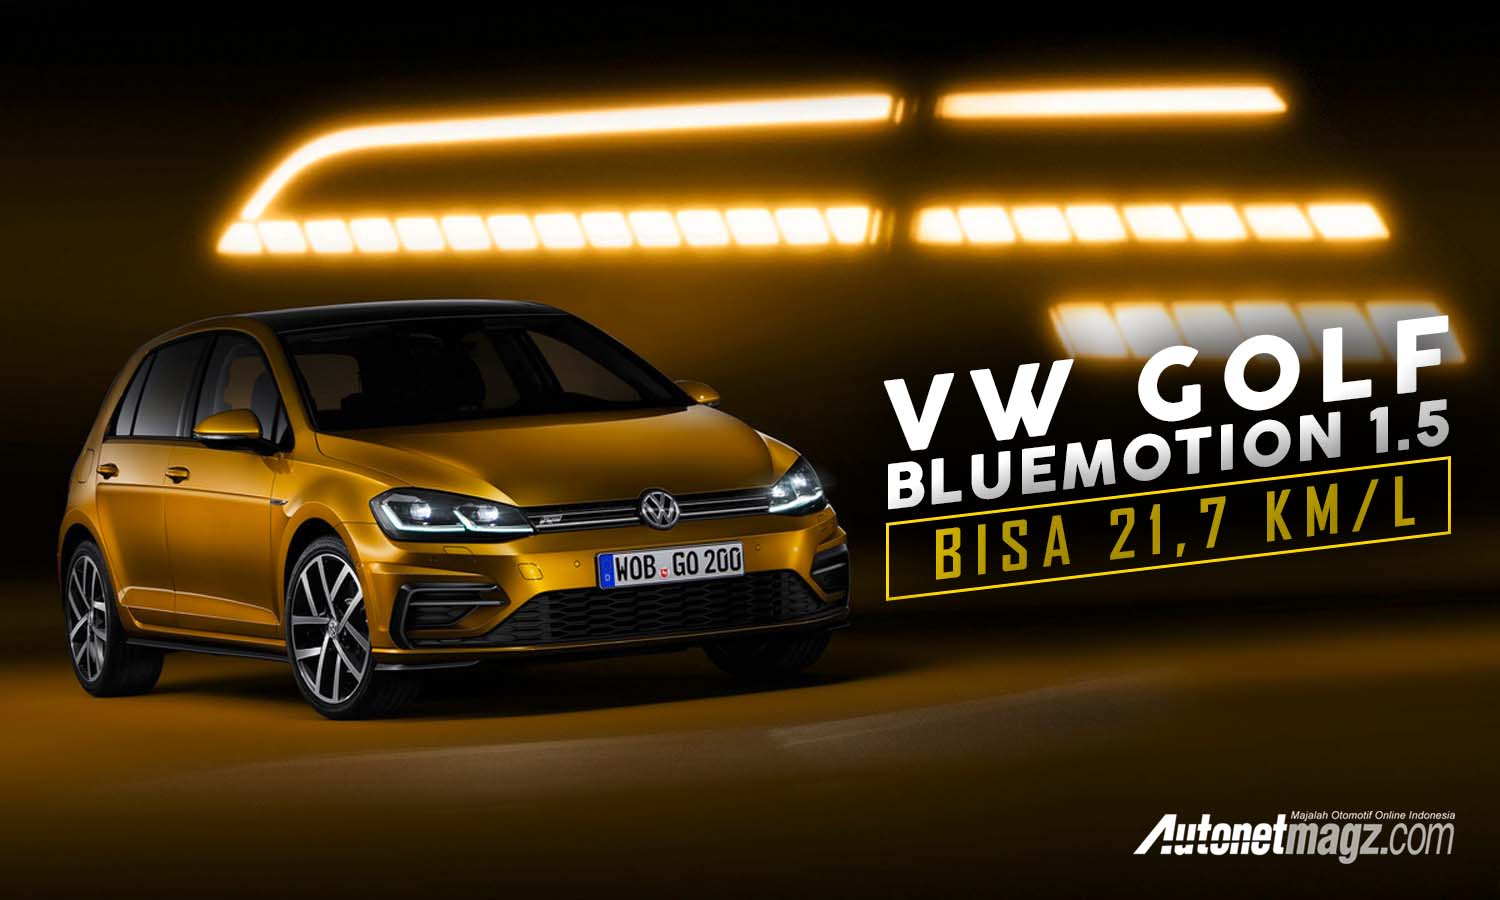 Berita, cover vokswagen golf bluemotion: Volkswagen Golf BlueMotion 1.5, Super Irit Sampai 21,7 Km/L